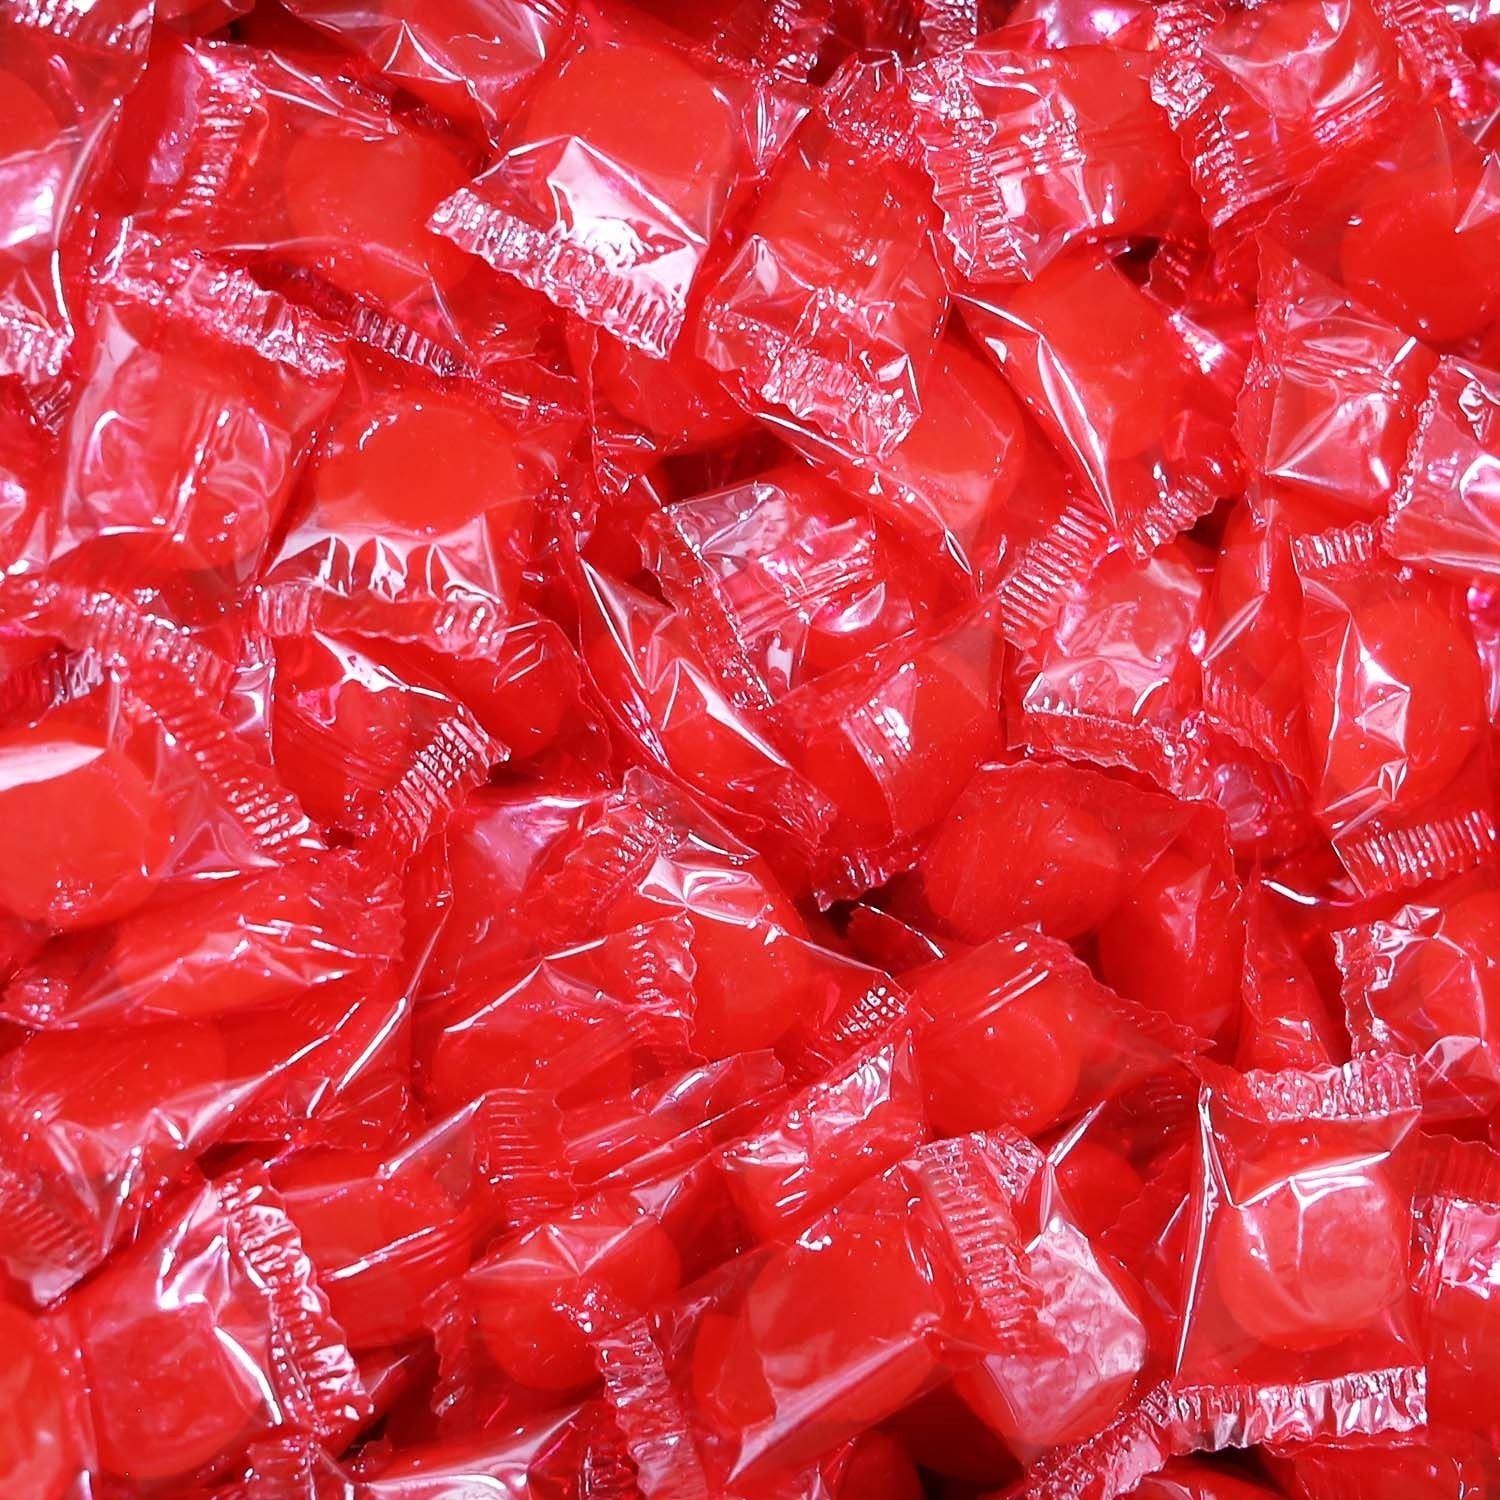 Cinnamon Hard Candy Discs 5 lb bag : : Everything Else